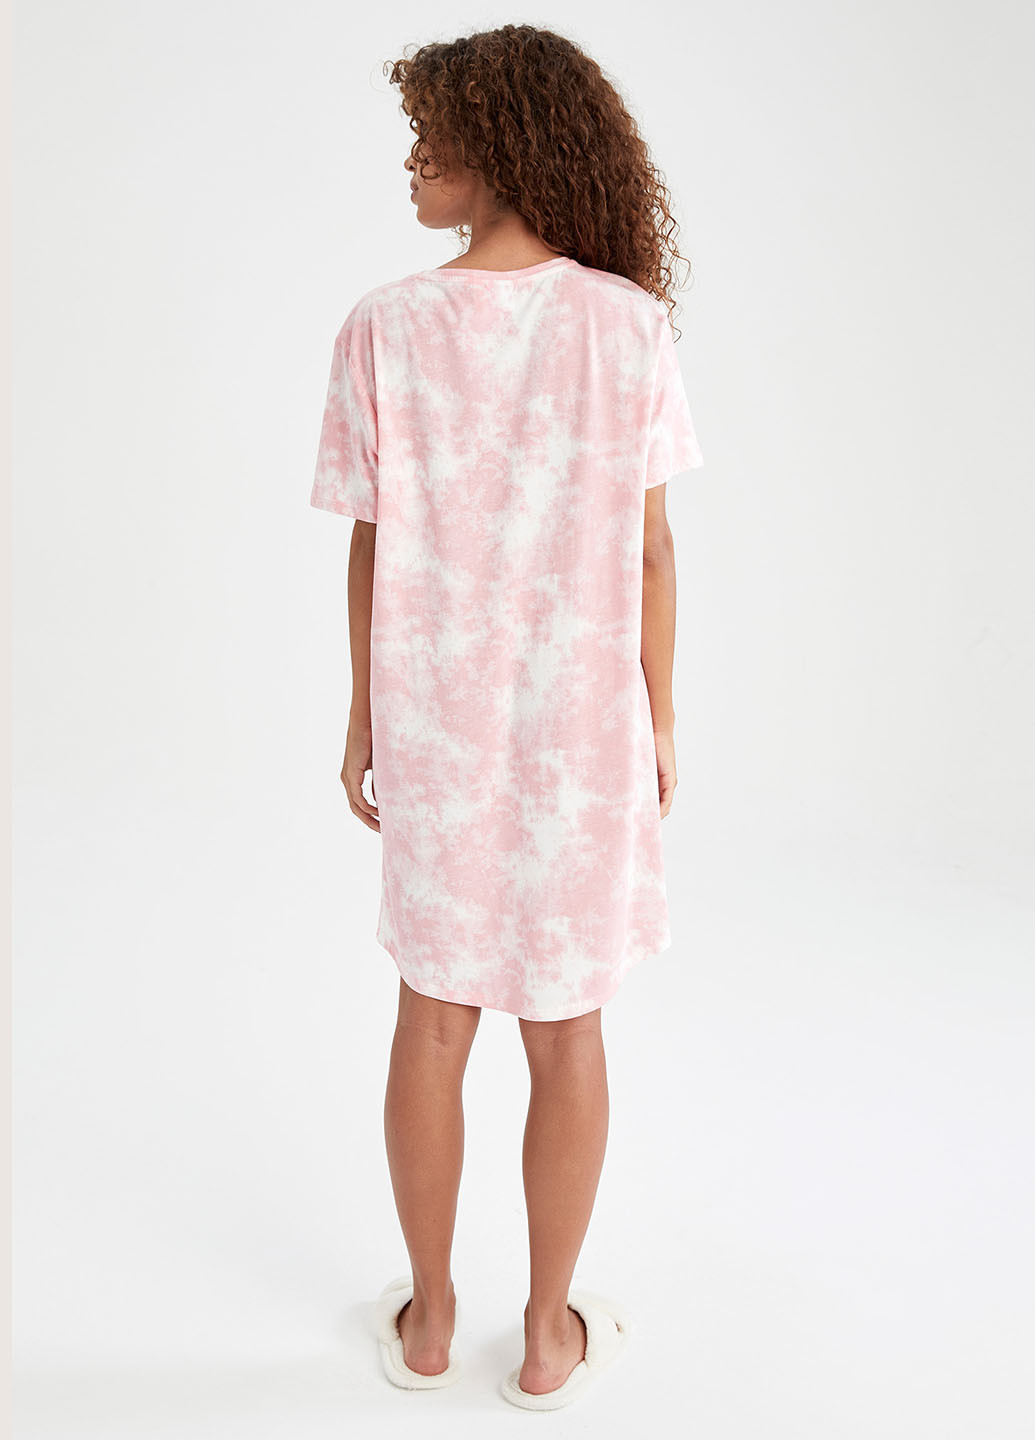 Светло-розовое домашнее платье платье-футболка DeFacto